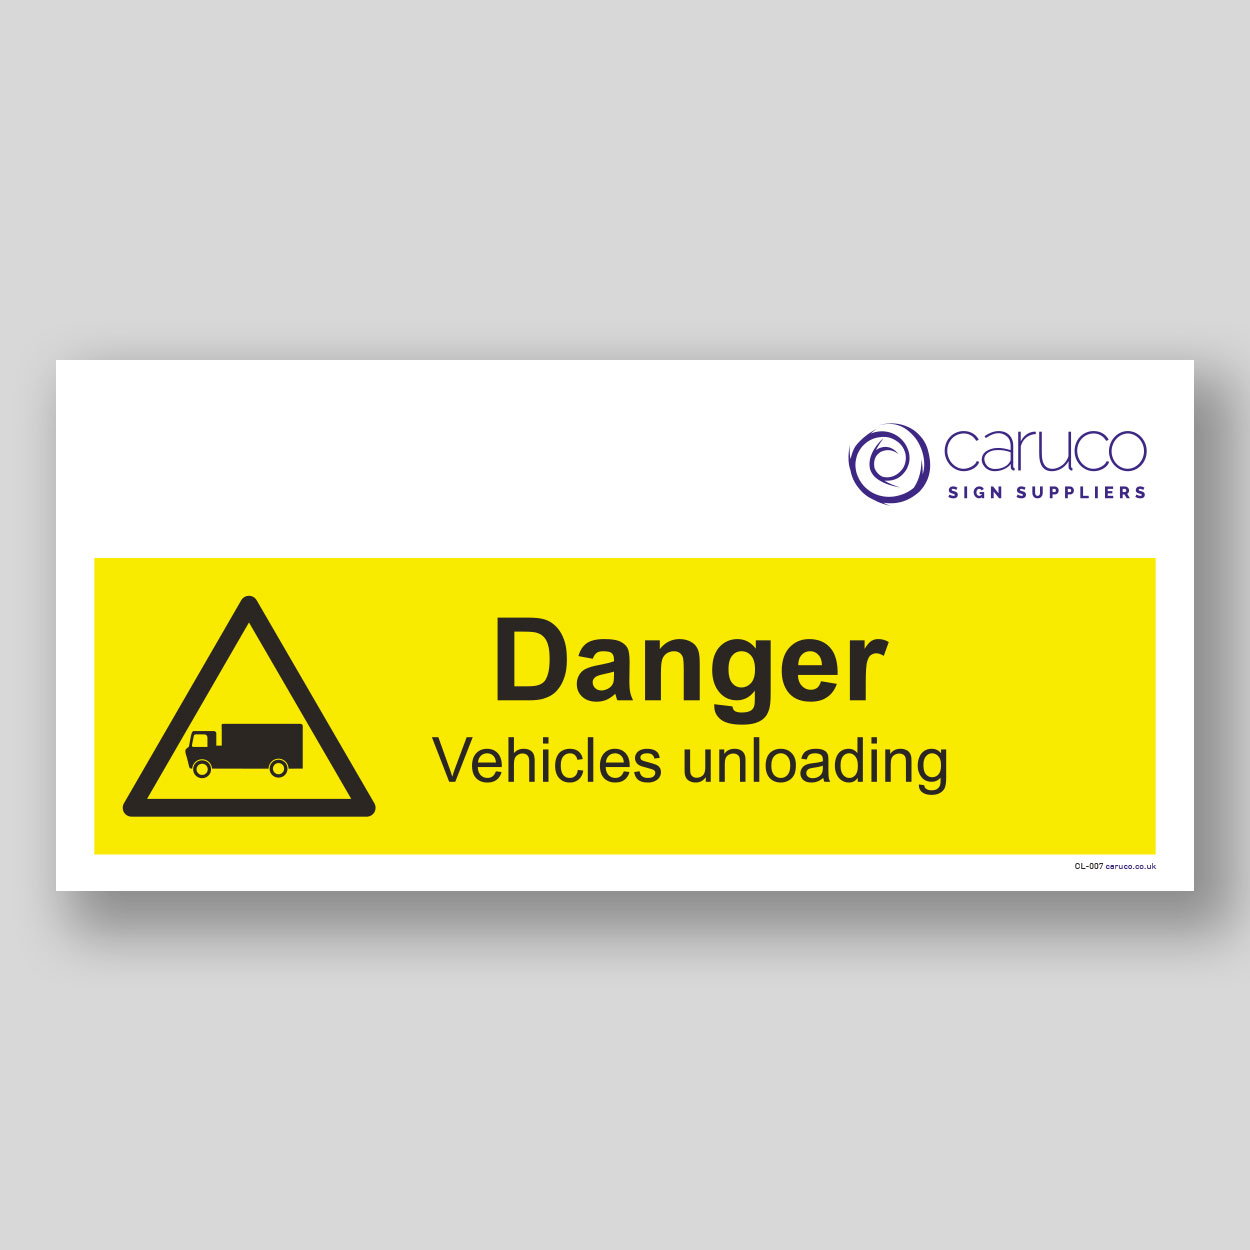 CL-007 Danger - vehicles unloading